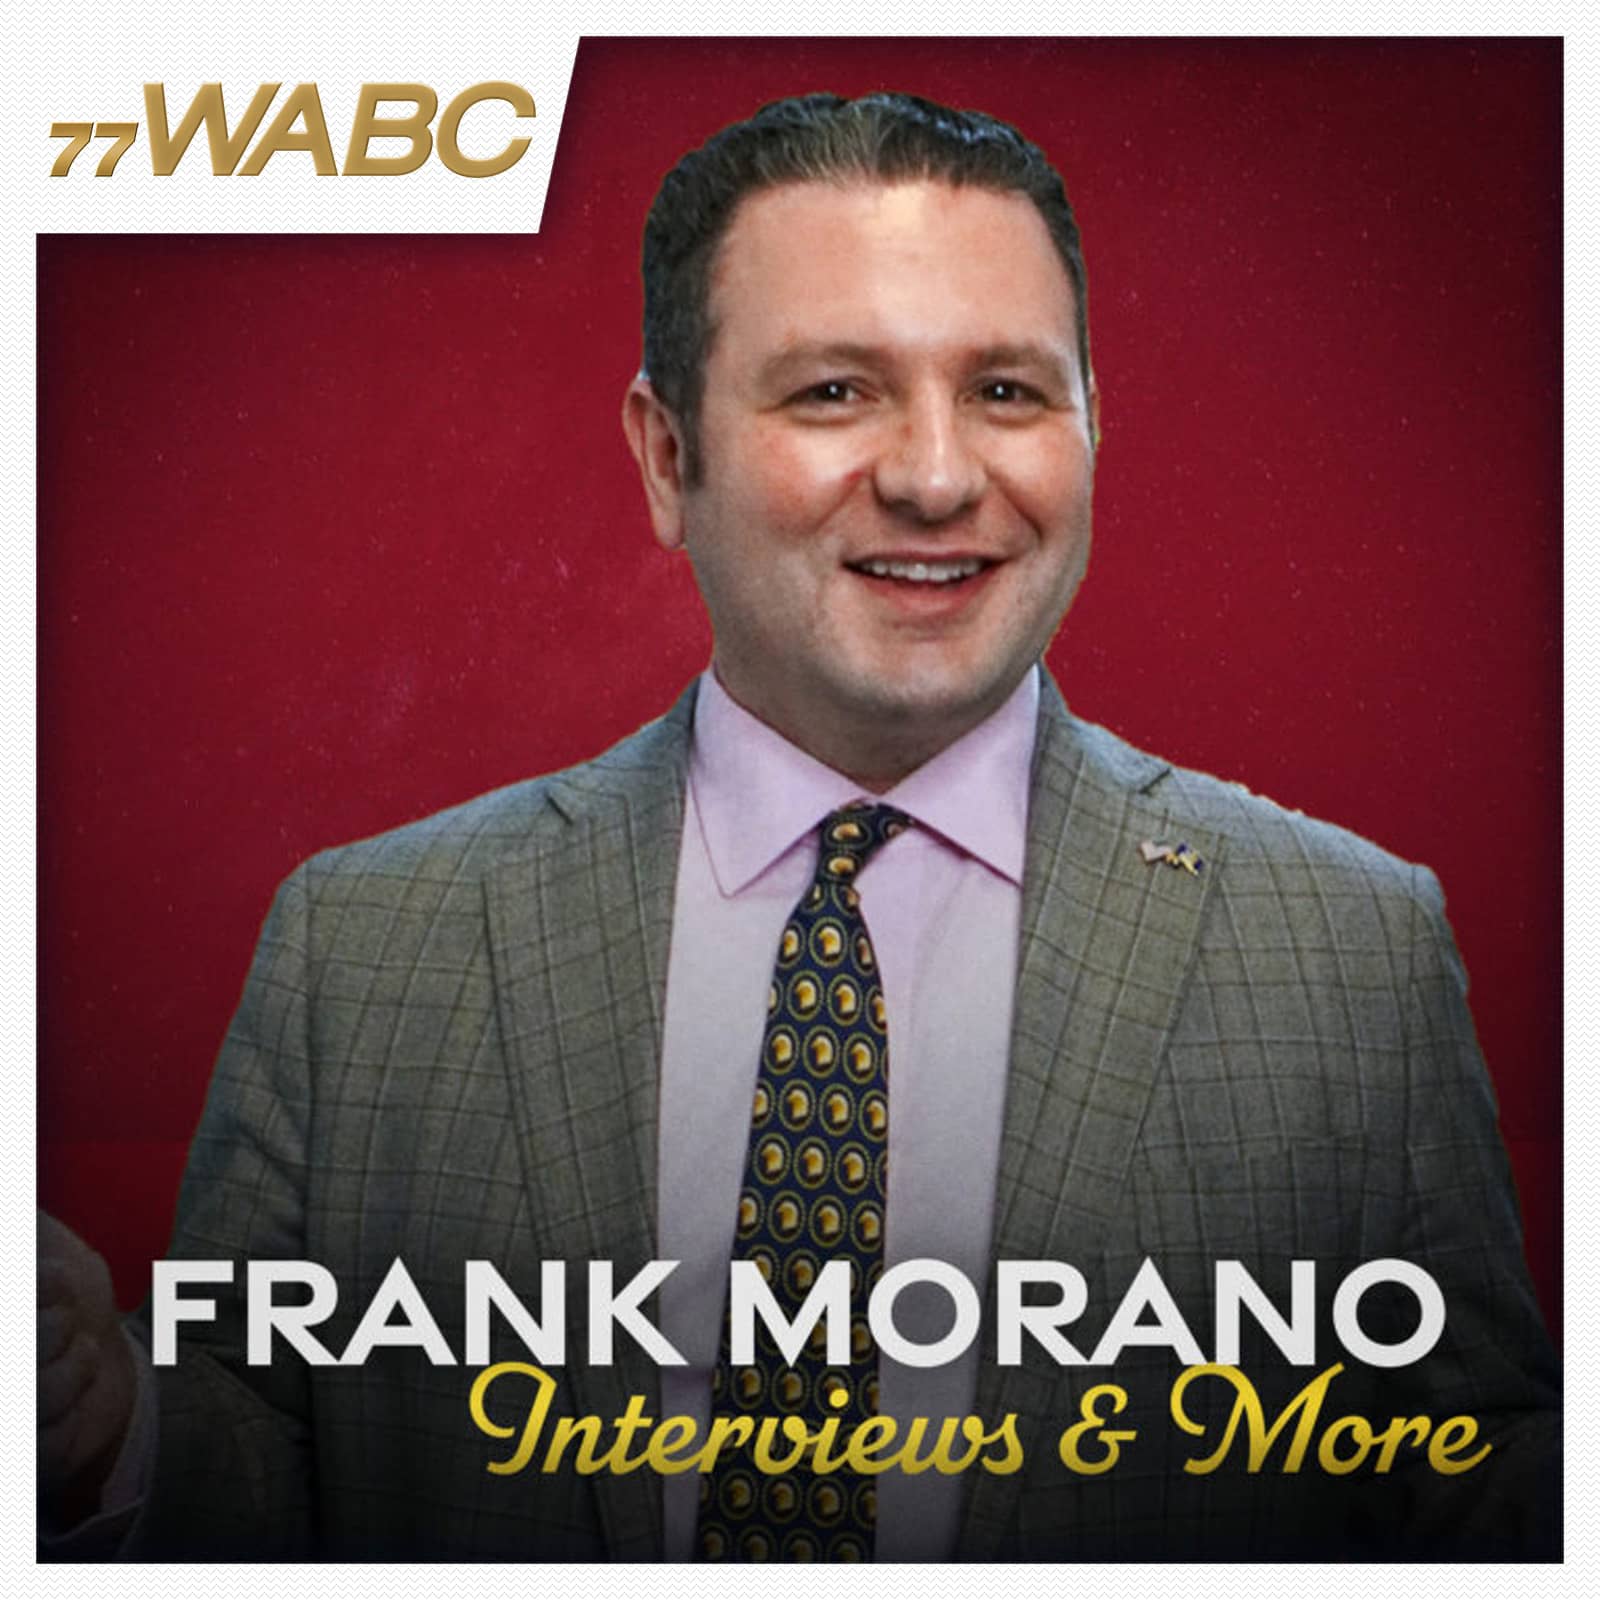 frank-morano-interviews-and-more-podcast-new-logo442183